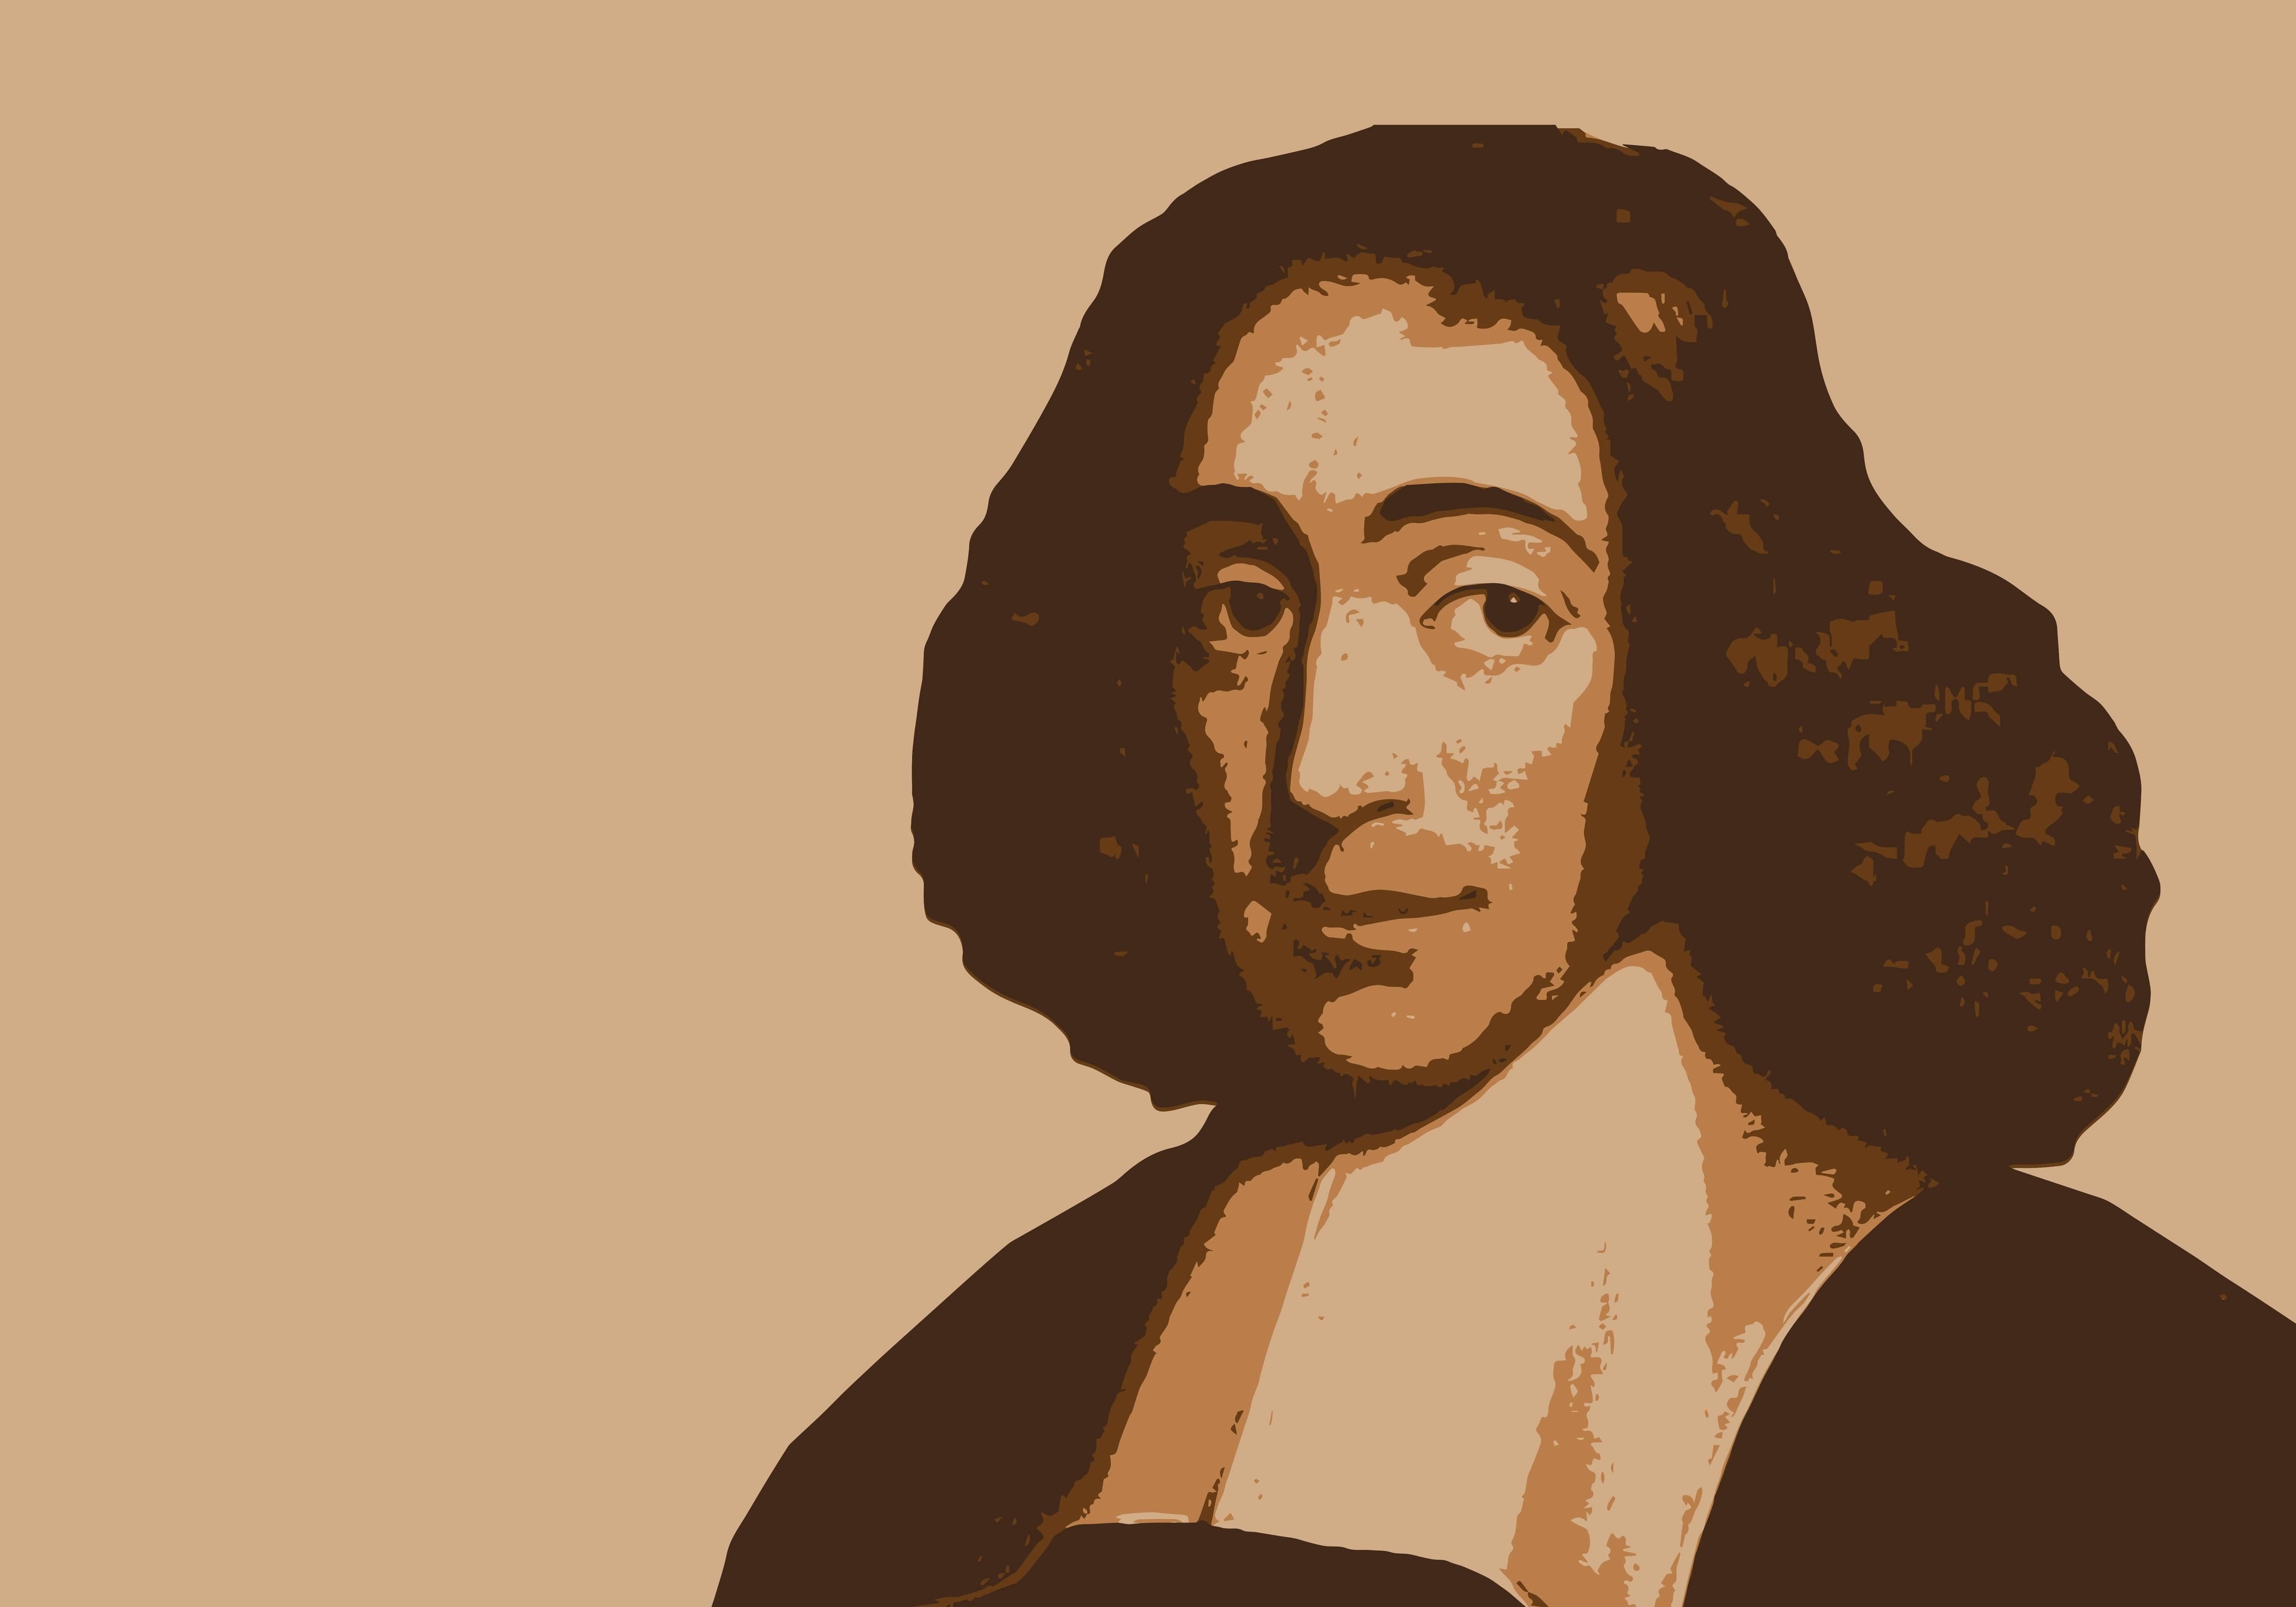 Baruch Spinoza - Geniuses